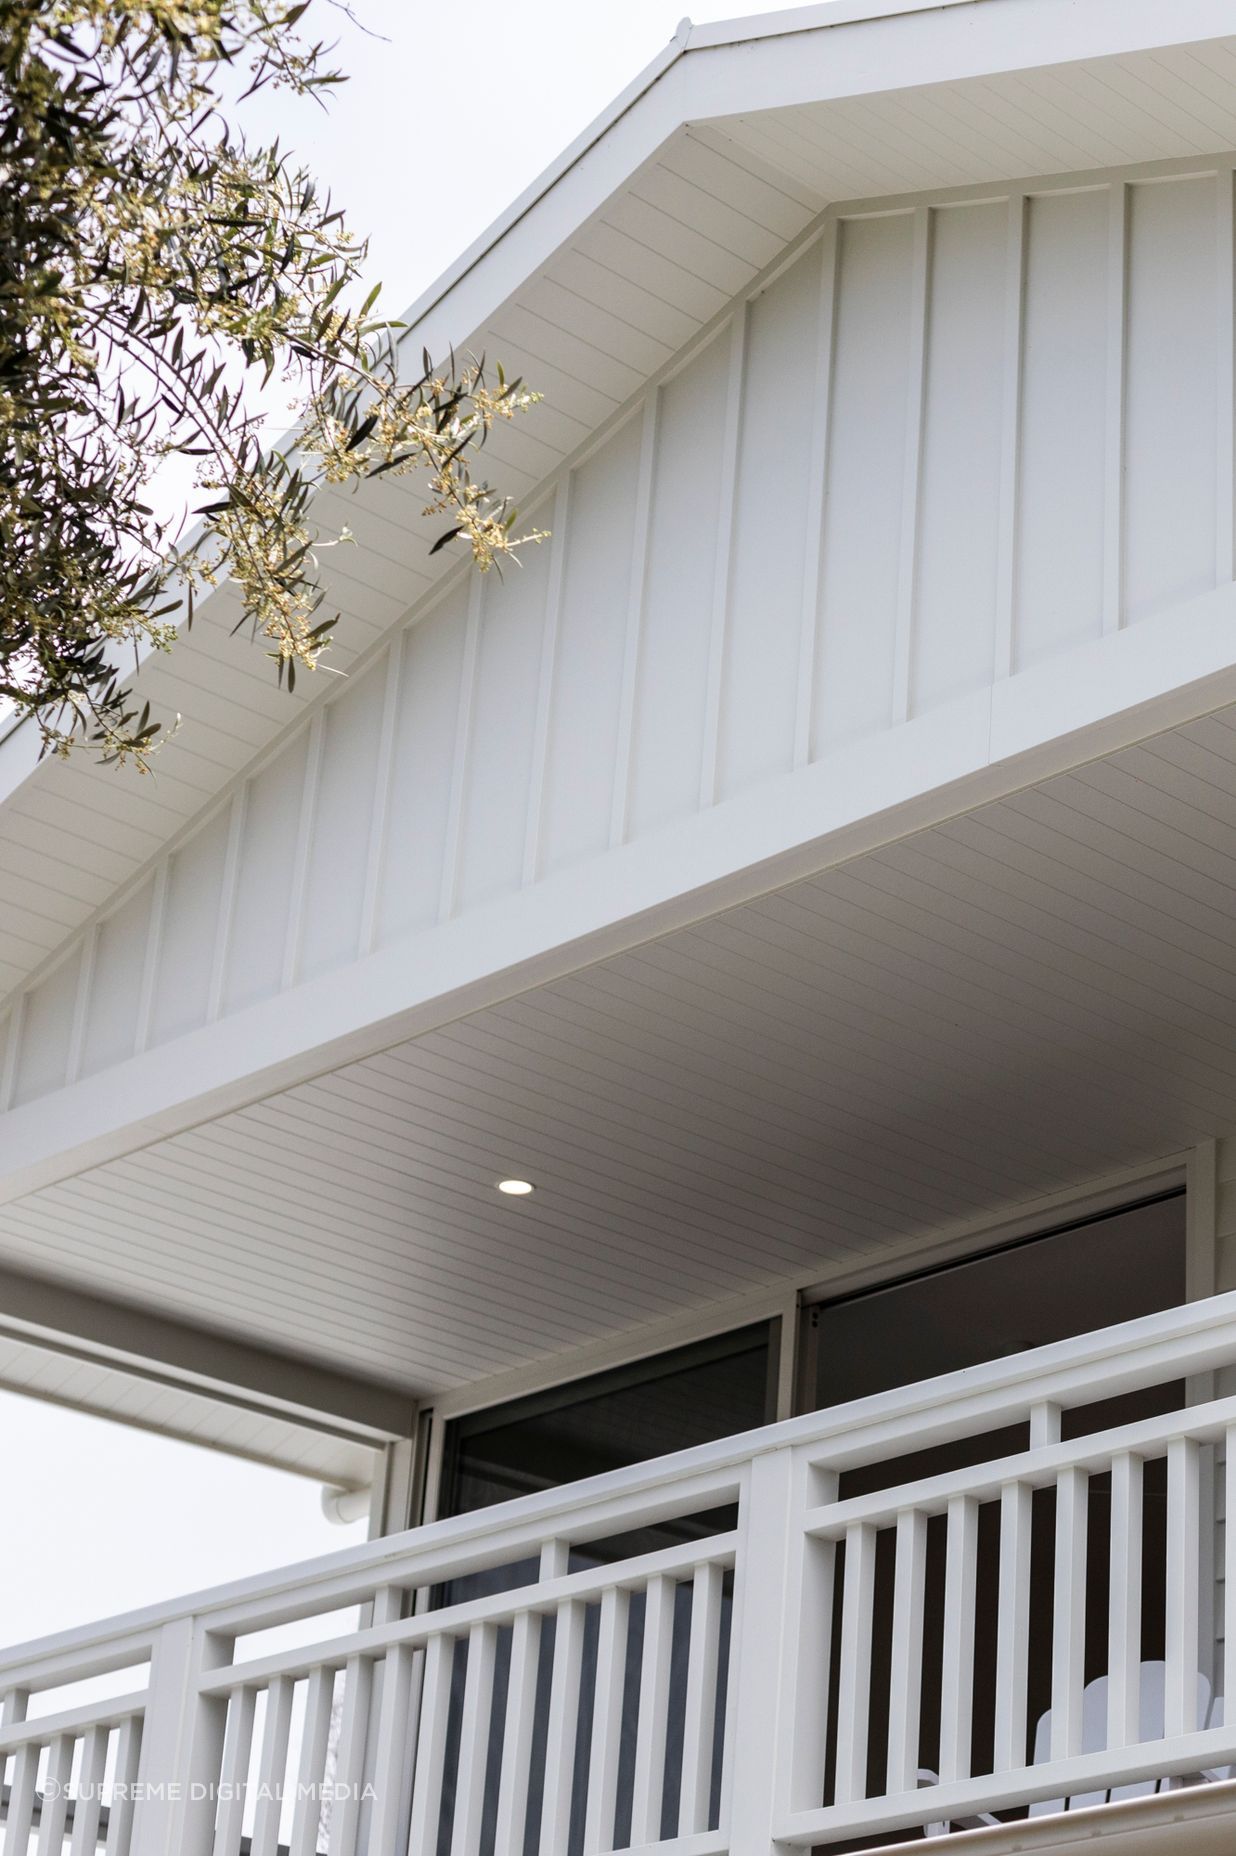 Bringing it back to basics: The quintessential verandah house